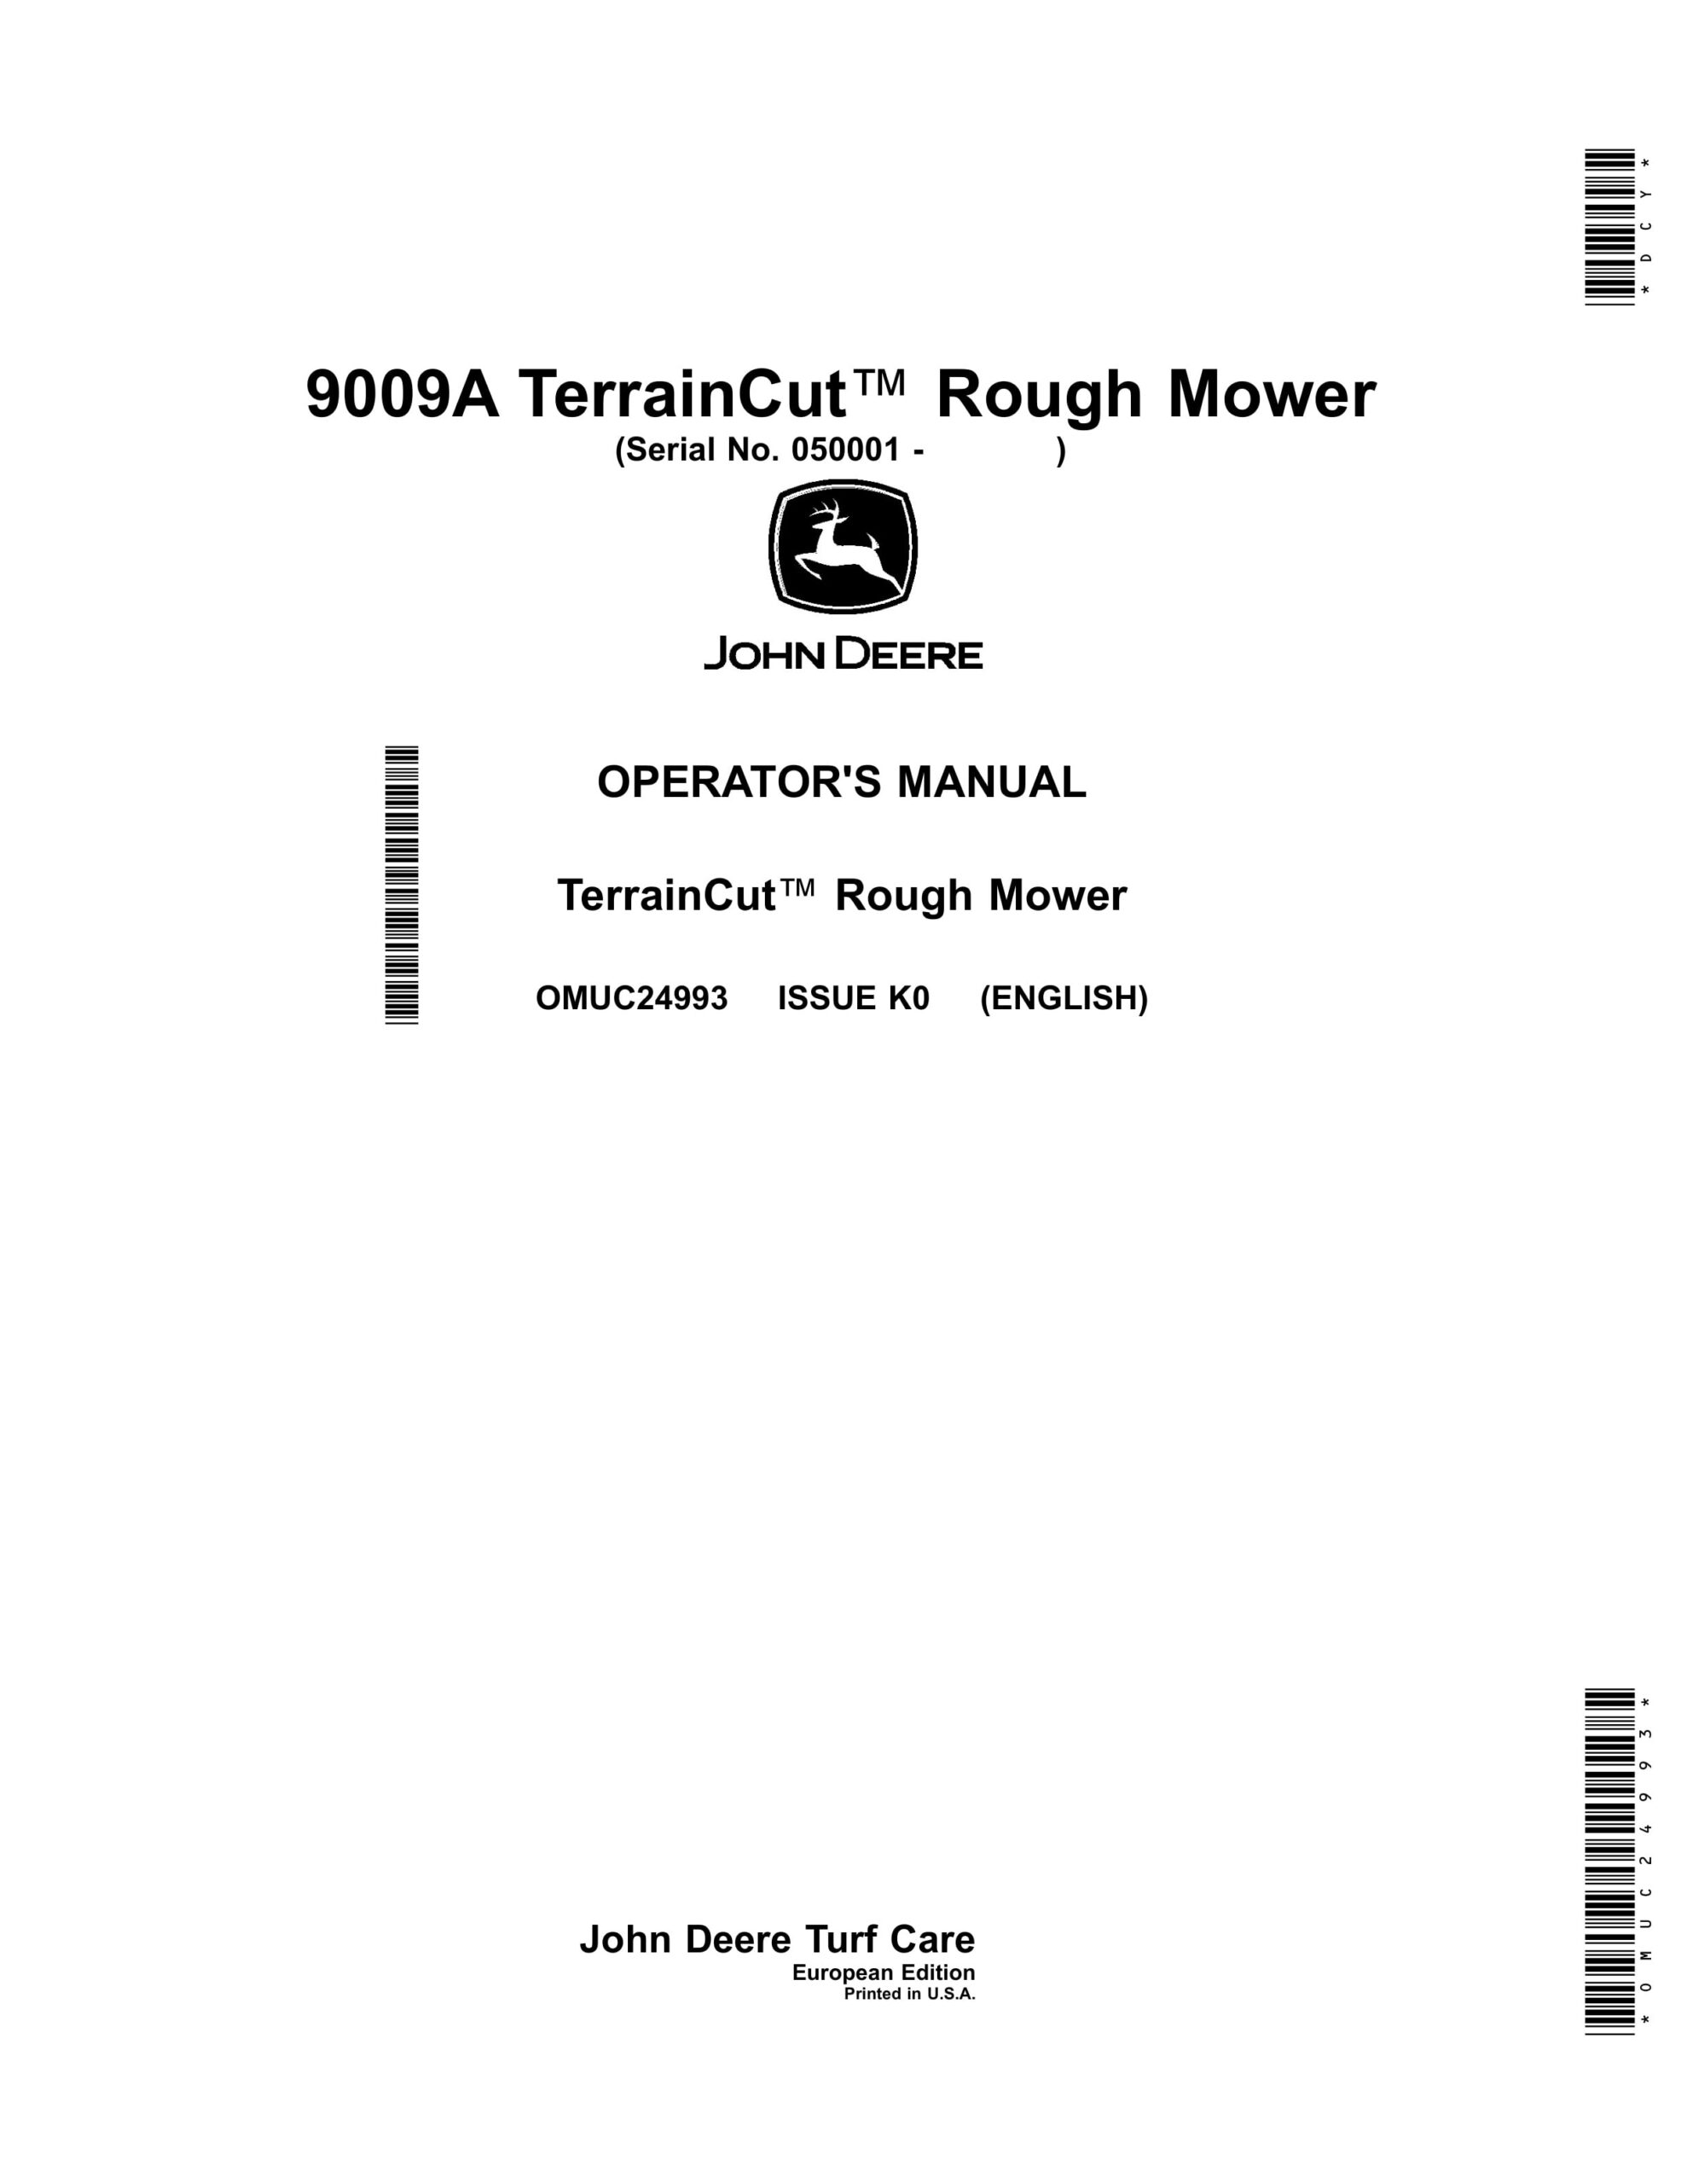 John Deere 9009A TerrainCut Rough Mower Operator Manual OMUC24993-1